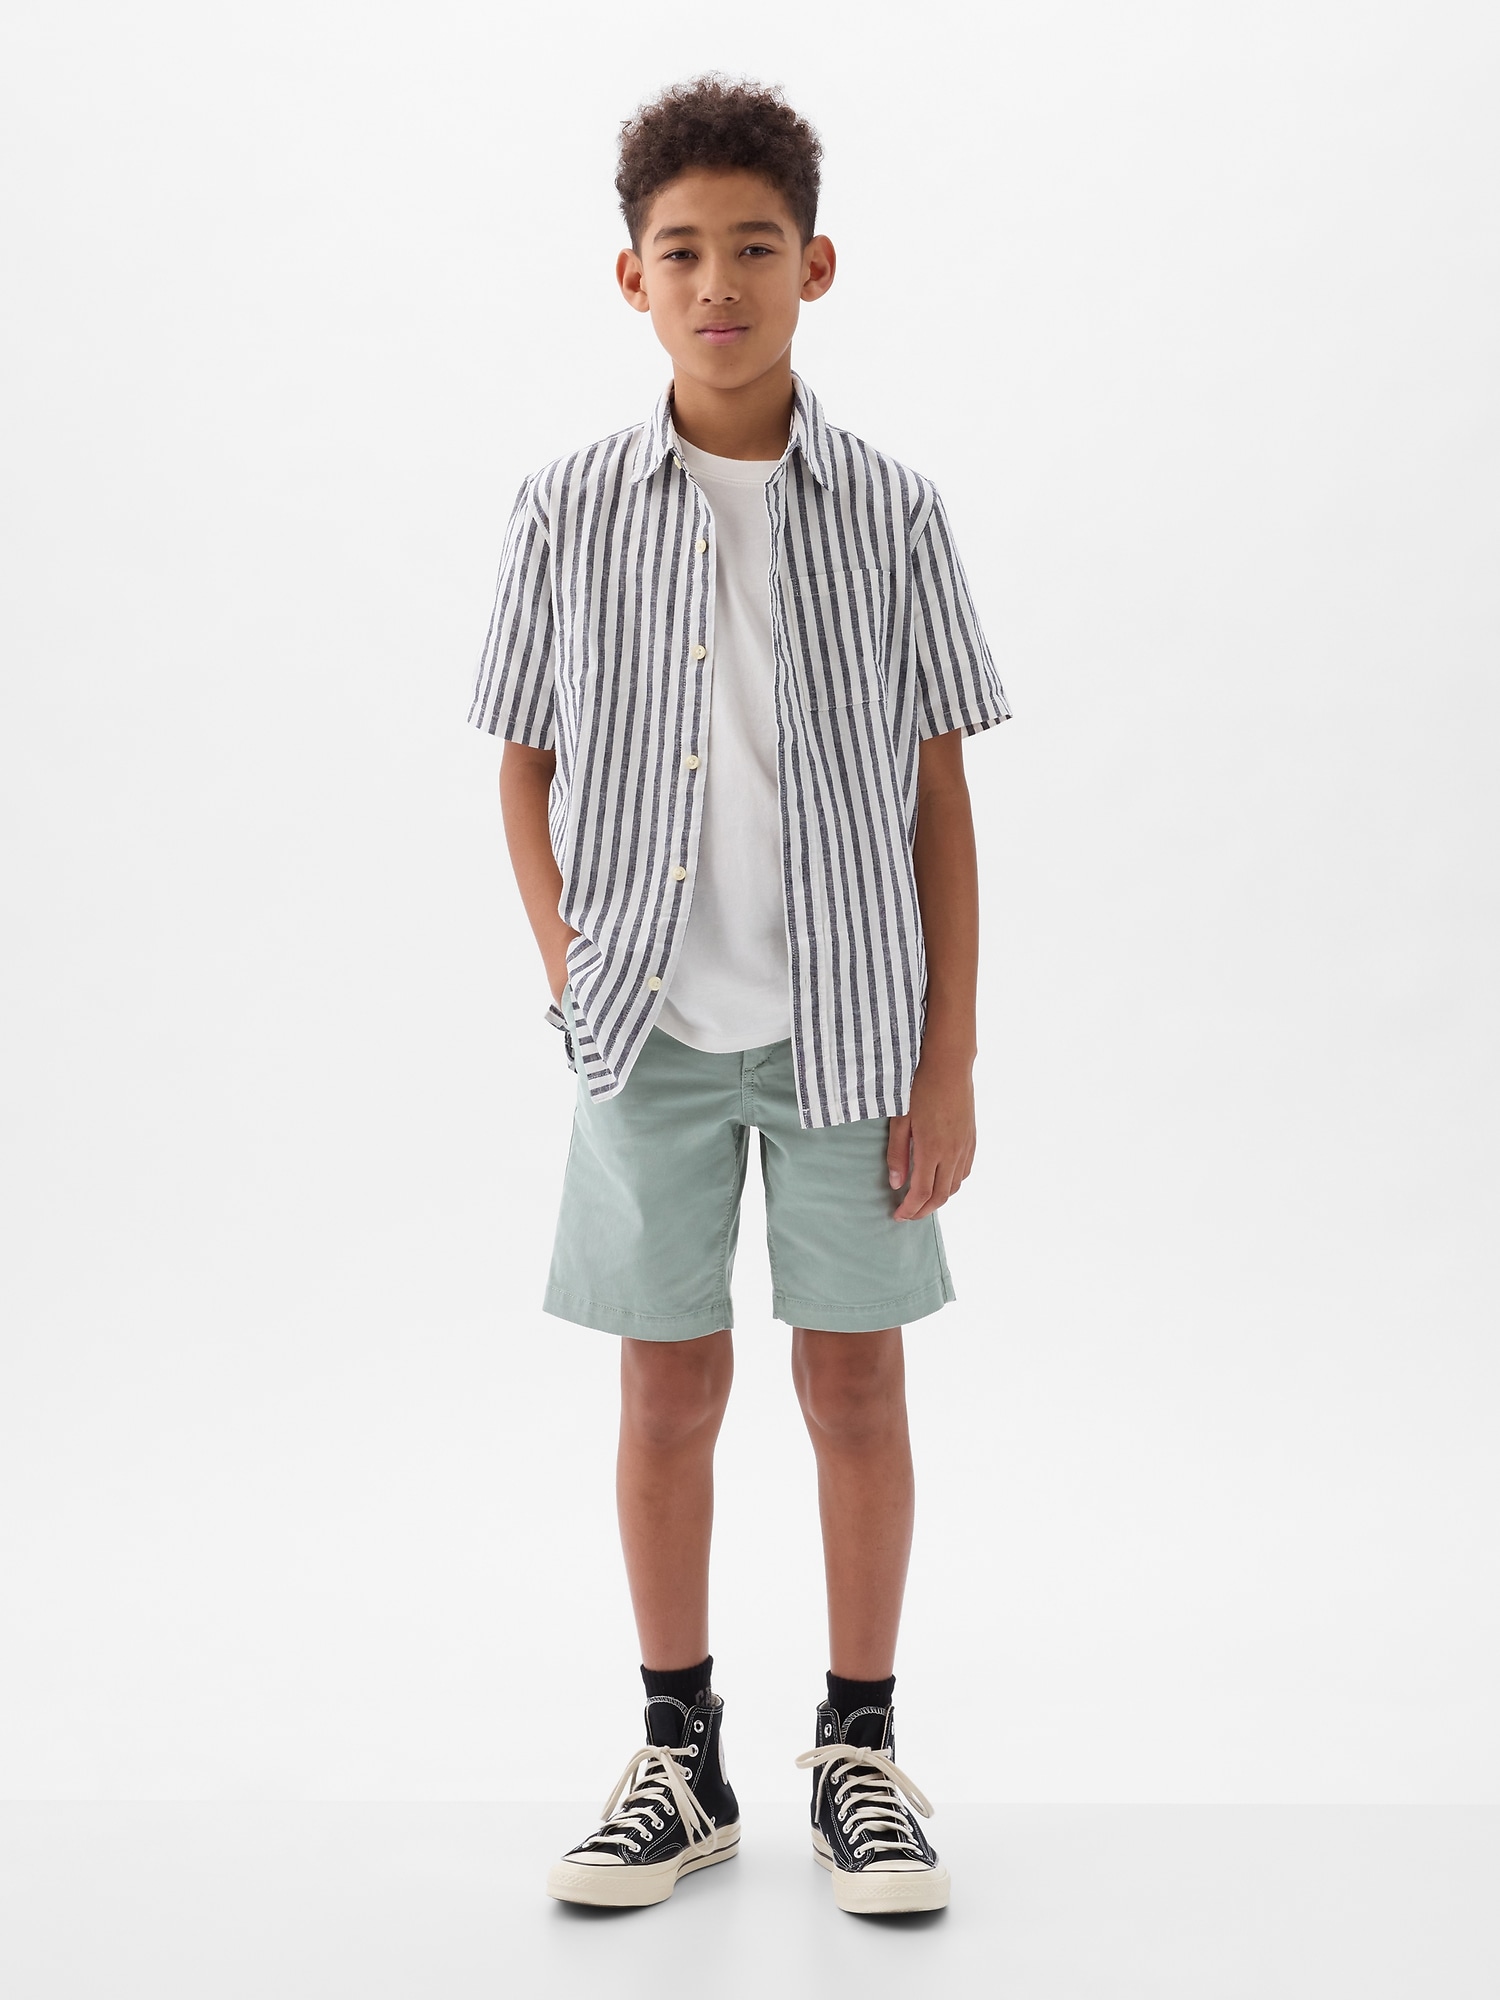 GAP Children's Shorts Uniform - Boys